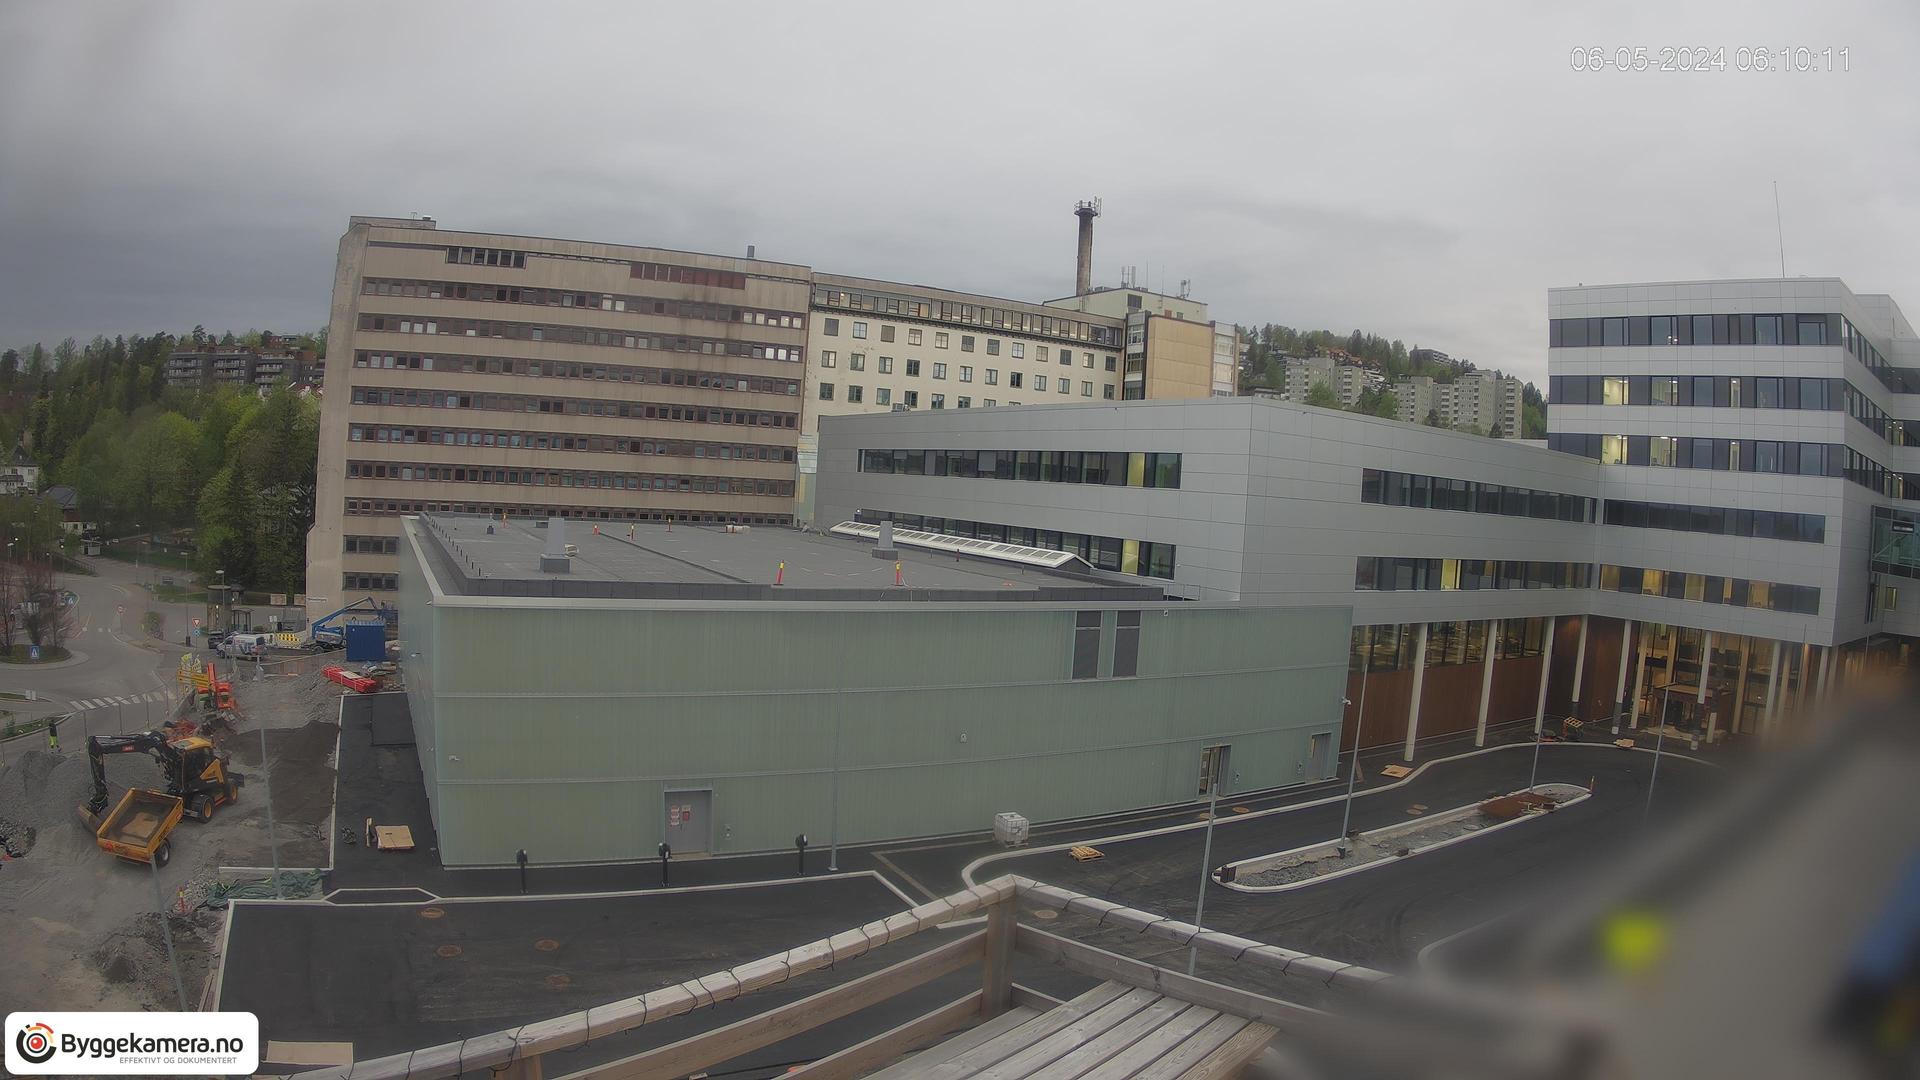 Oslo webcam, Oslo University Hospital, Radiumhospitalet